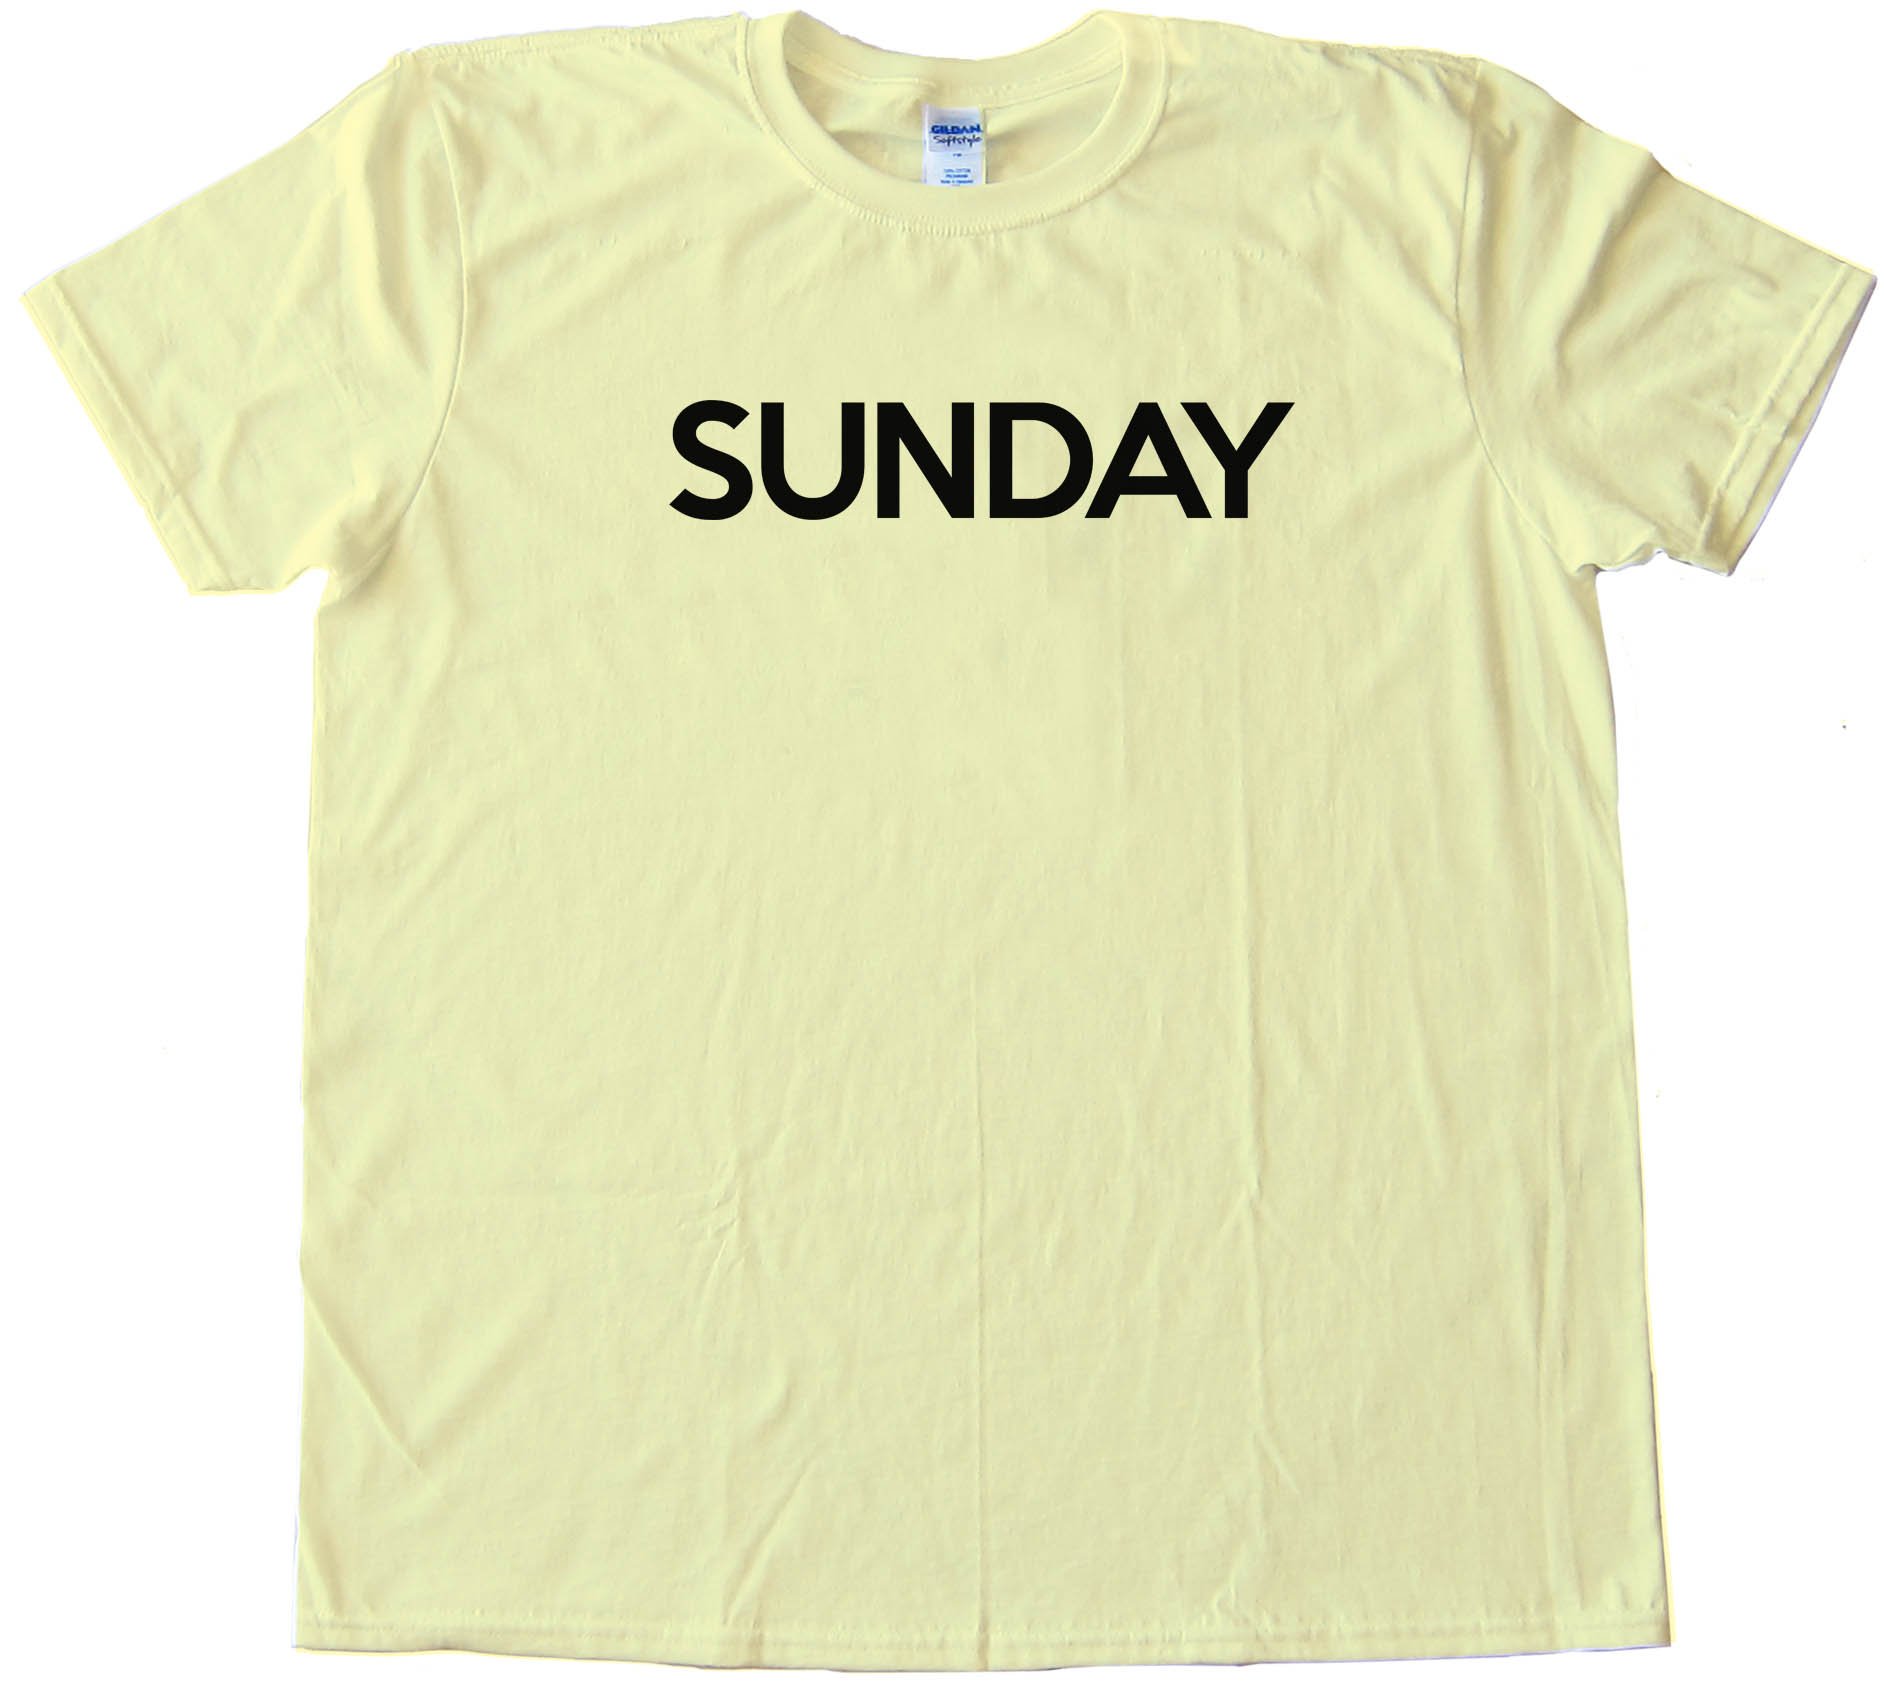 Sunday - Days Of The Week - Tee Shirt